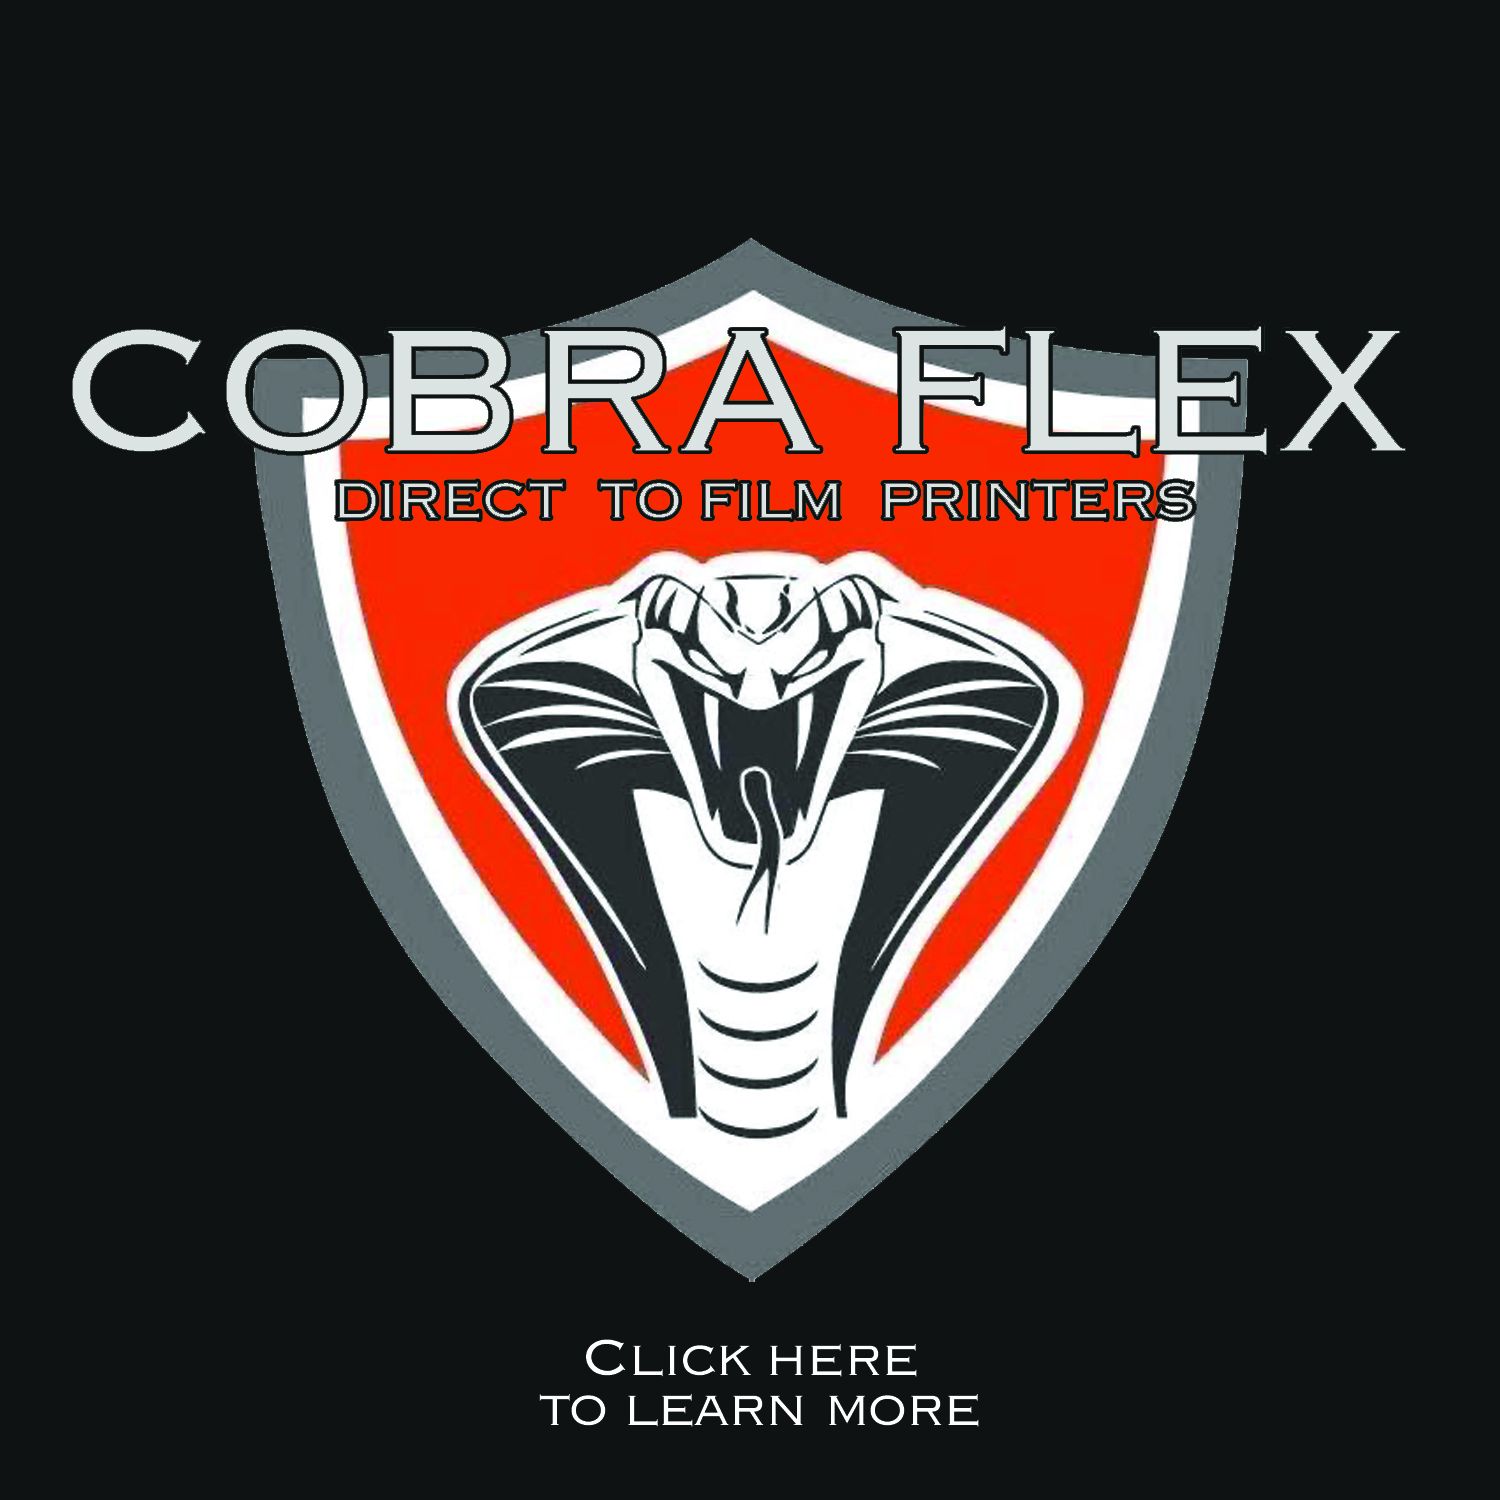 Cobraflex Printers